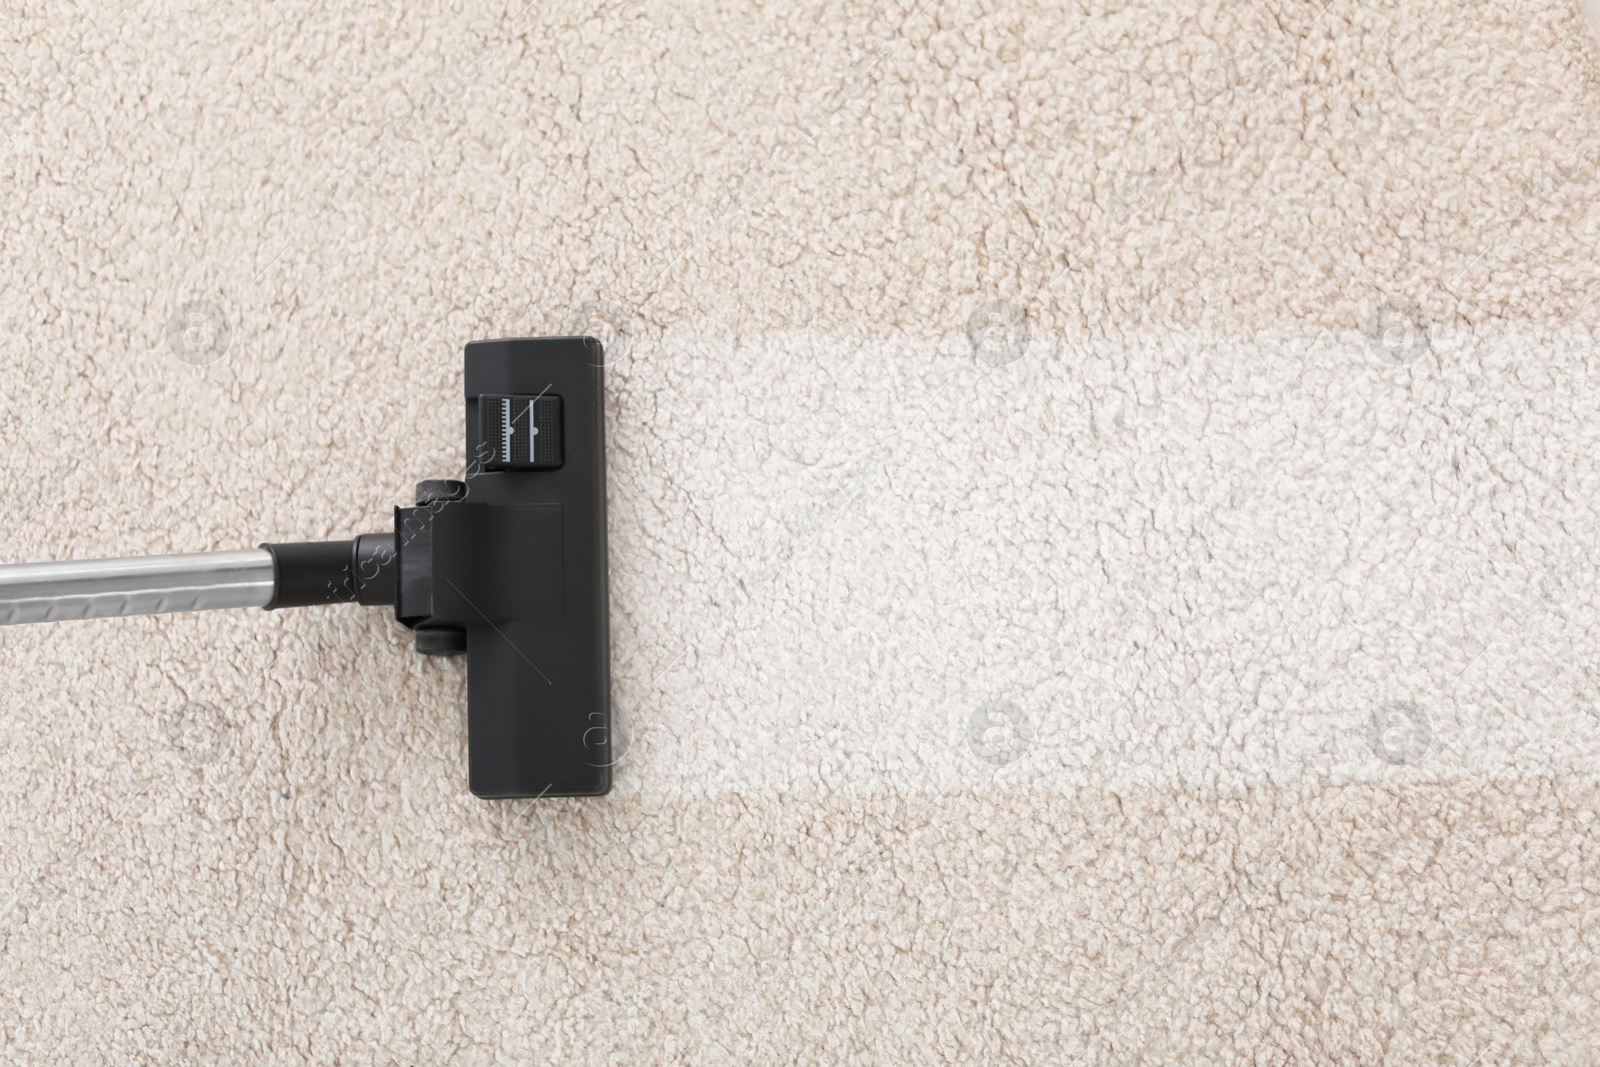 Photo of Vacuum cleaner on carpet